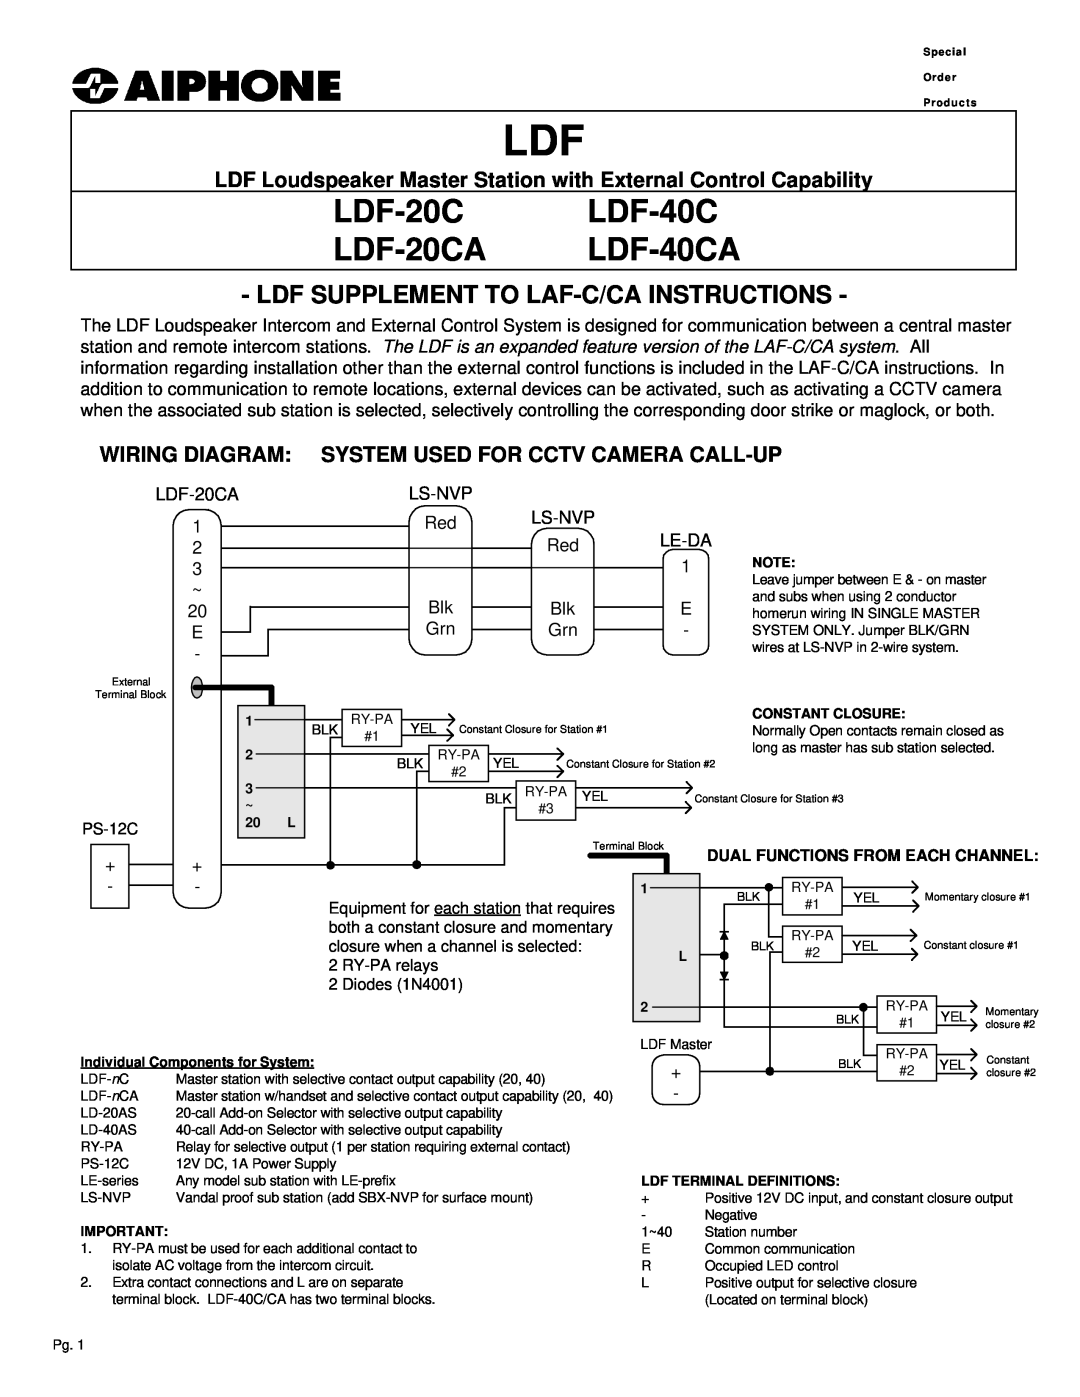 Aiphone manual LDF Loudspeaker Master Station with External Control Capability, LDF-20C LDF-40C LDF-20CA LDF-40CA 